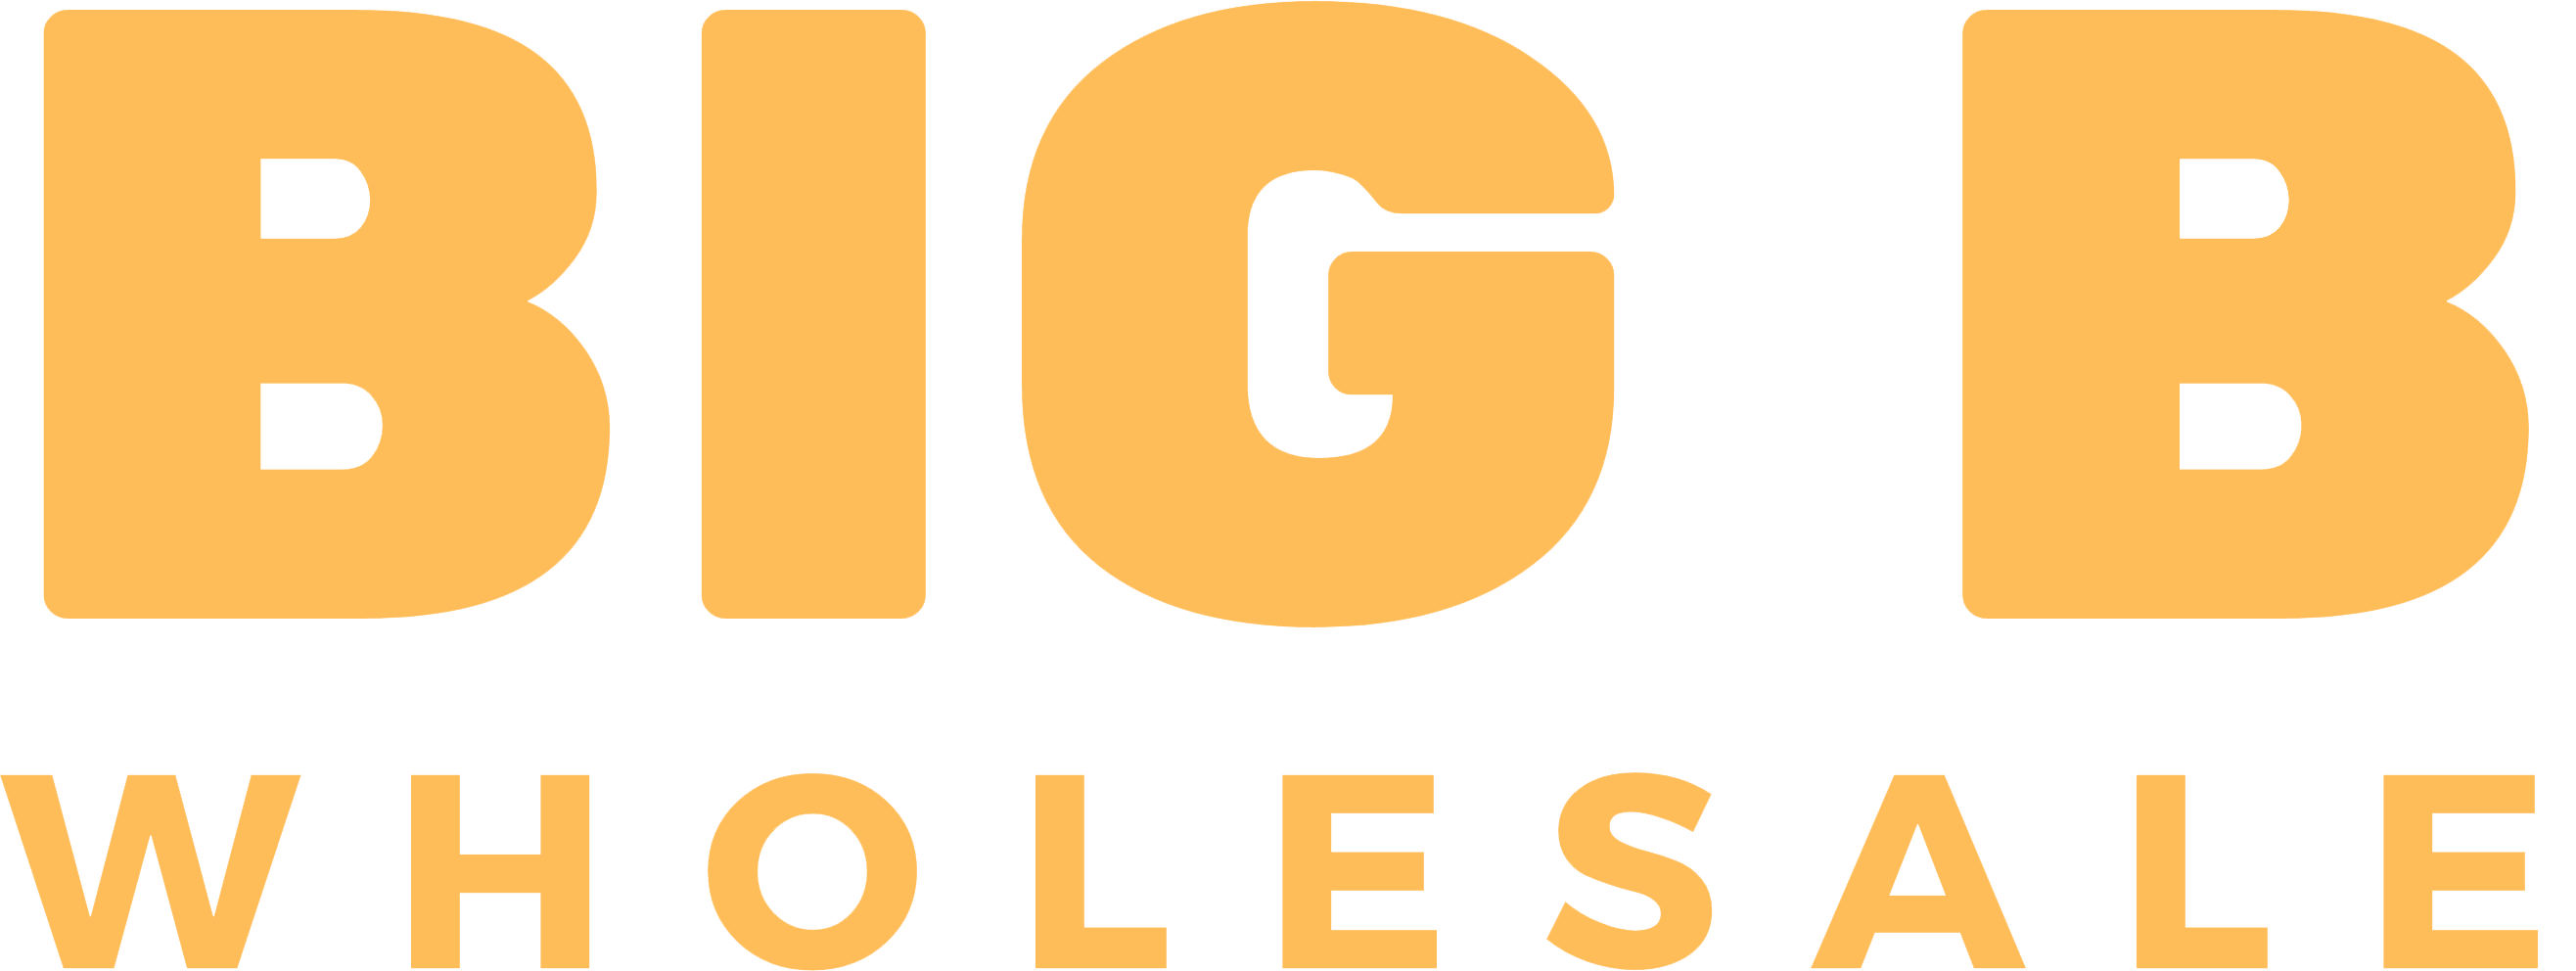 Bigb Text logo